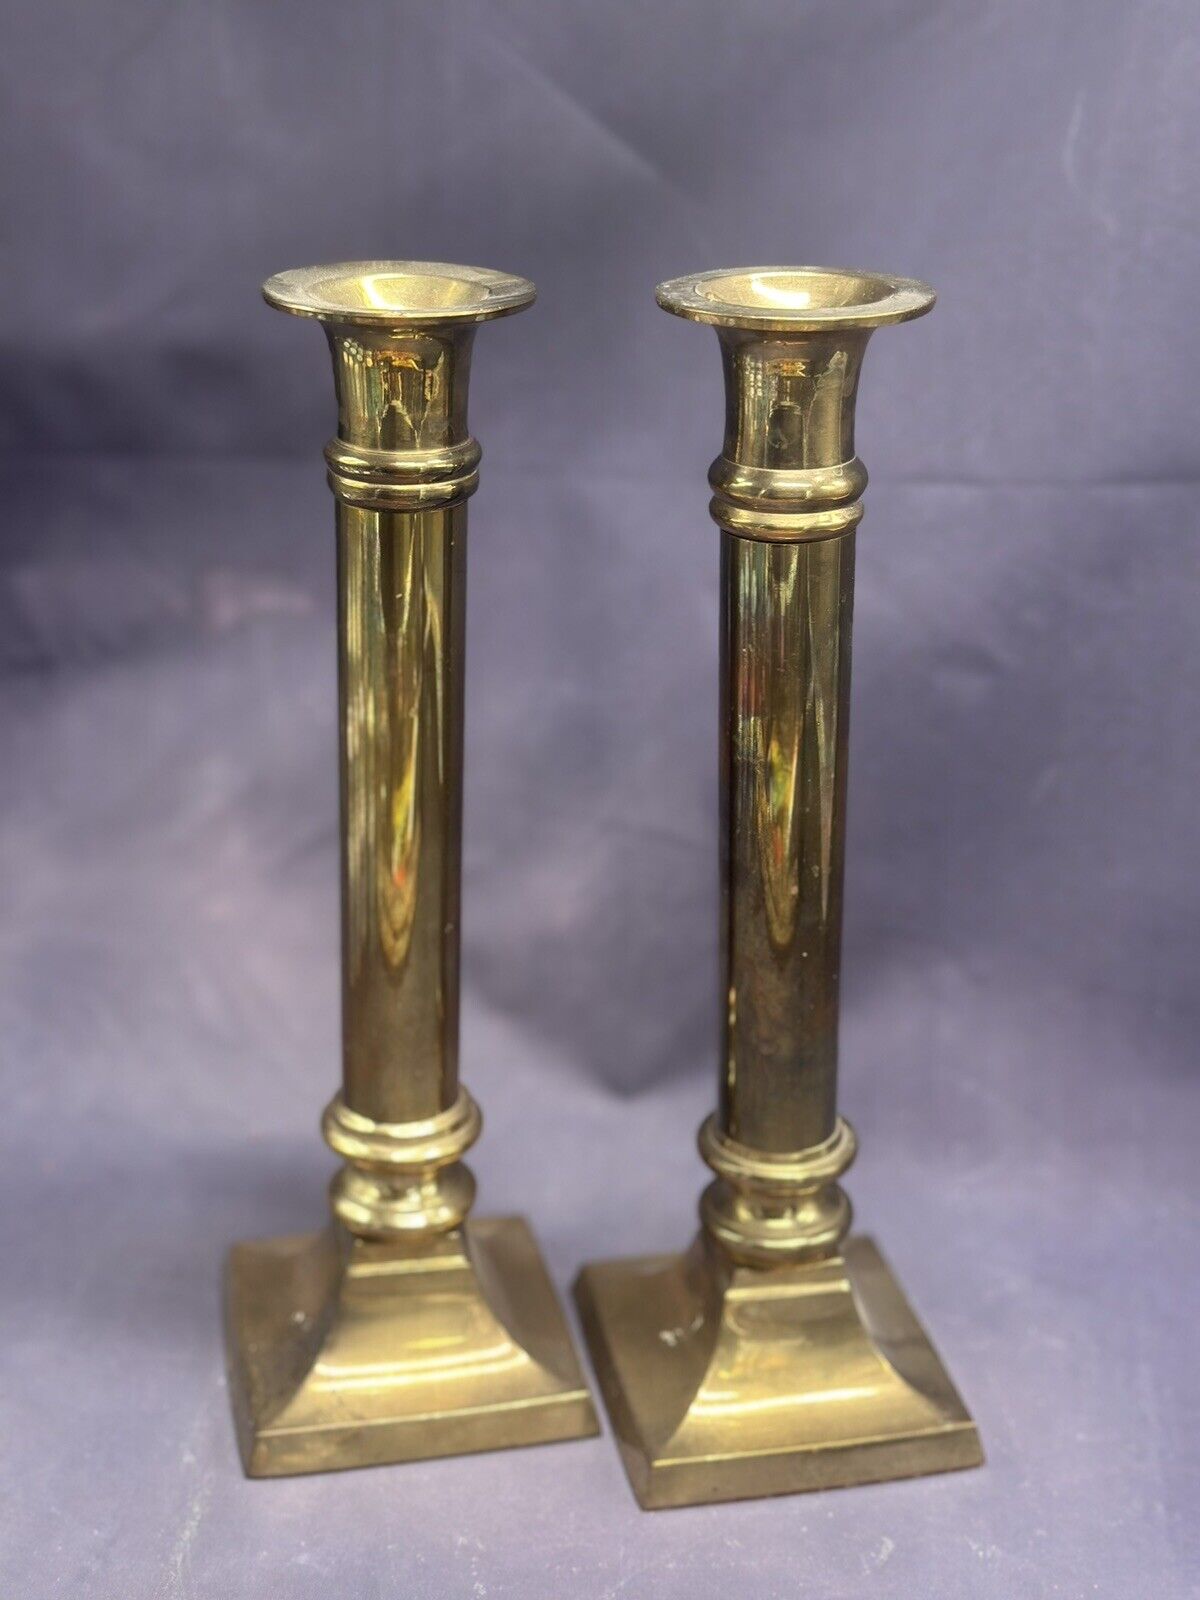 Vintage Brass Candlesticks Candle Holders Solid Pair Ornate Regent